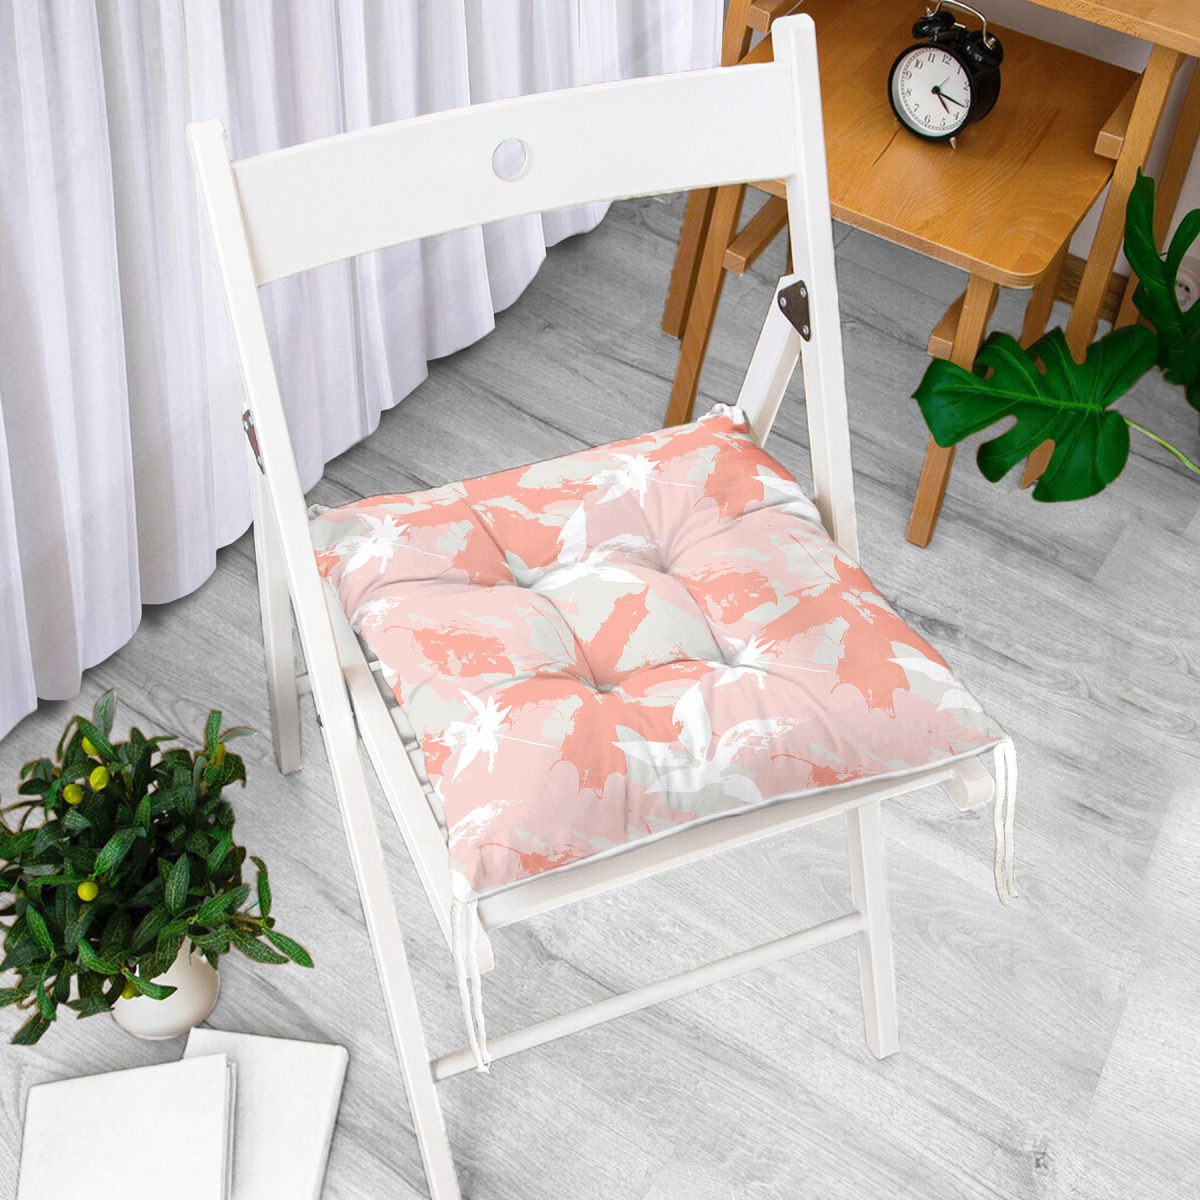 Gri Zemin Üzerinde Pembe Beyaz Yaprak Motifli Dekoratif Pofuduk Sandalye Minderi Realhomes